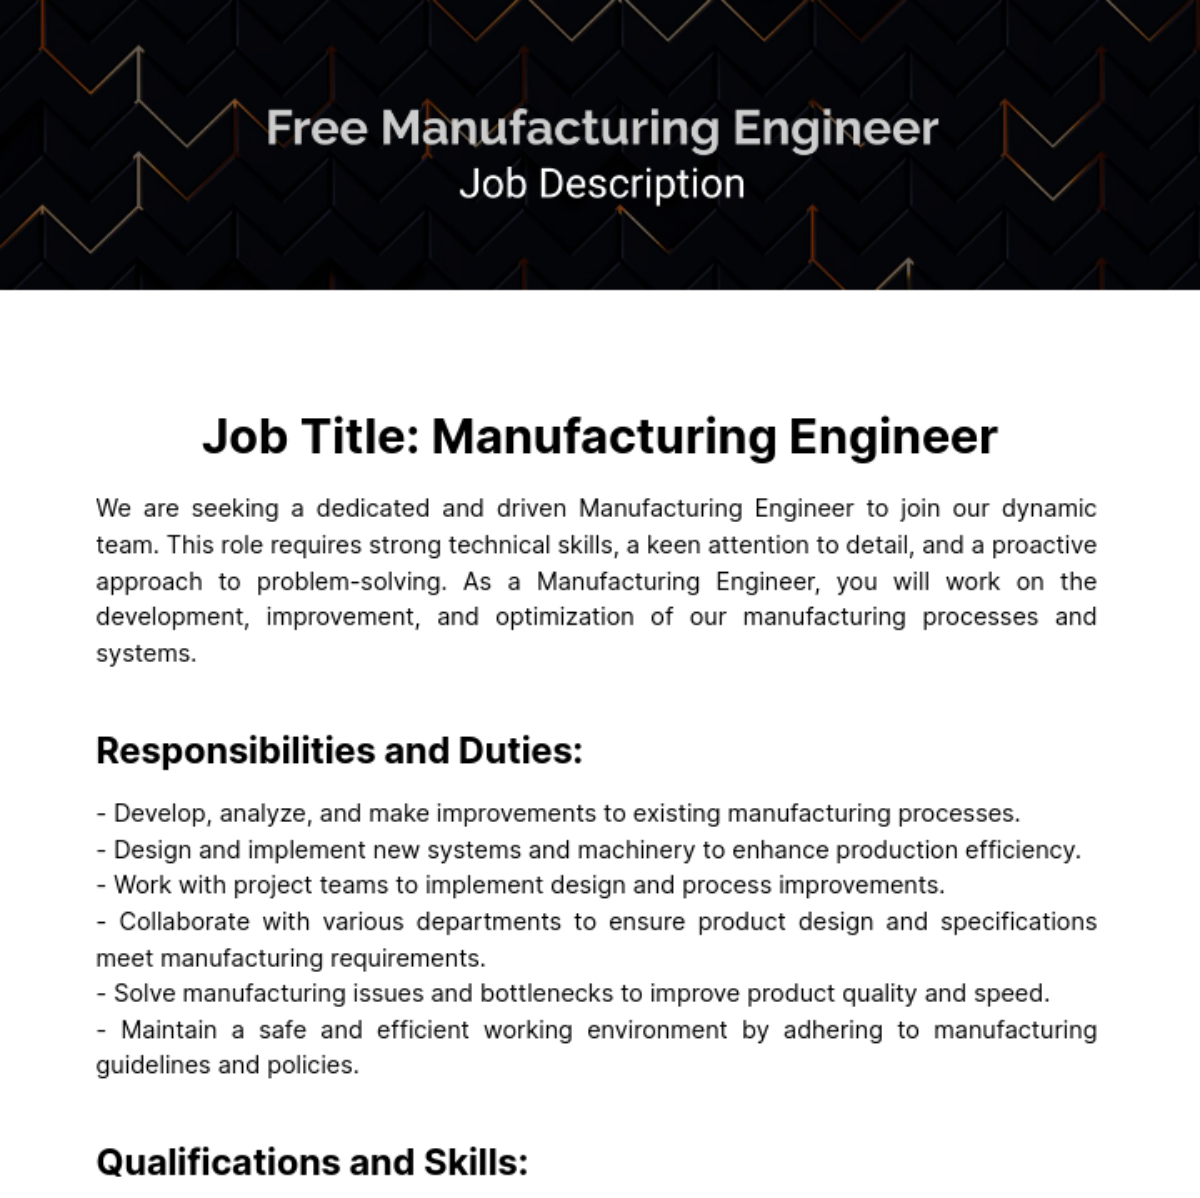 Free Manufacturing Engineer Job Description Template